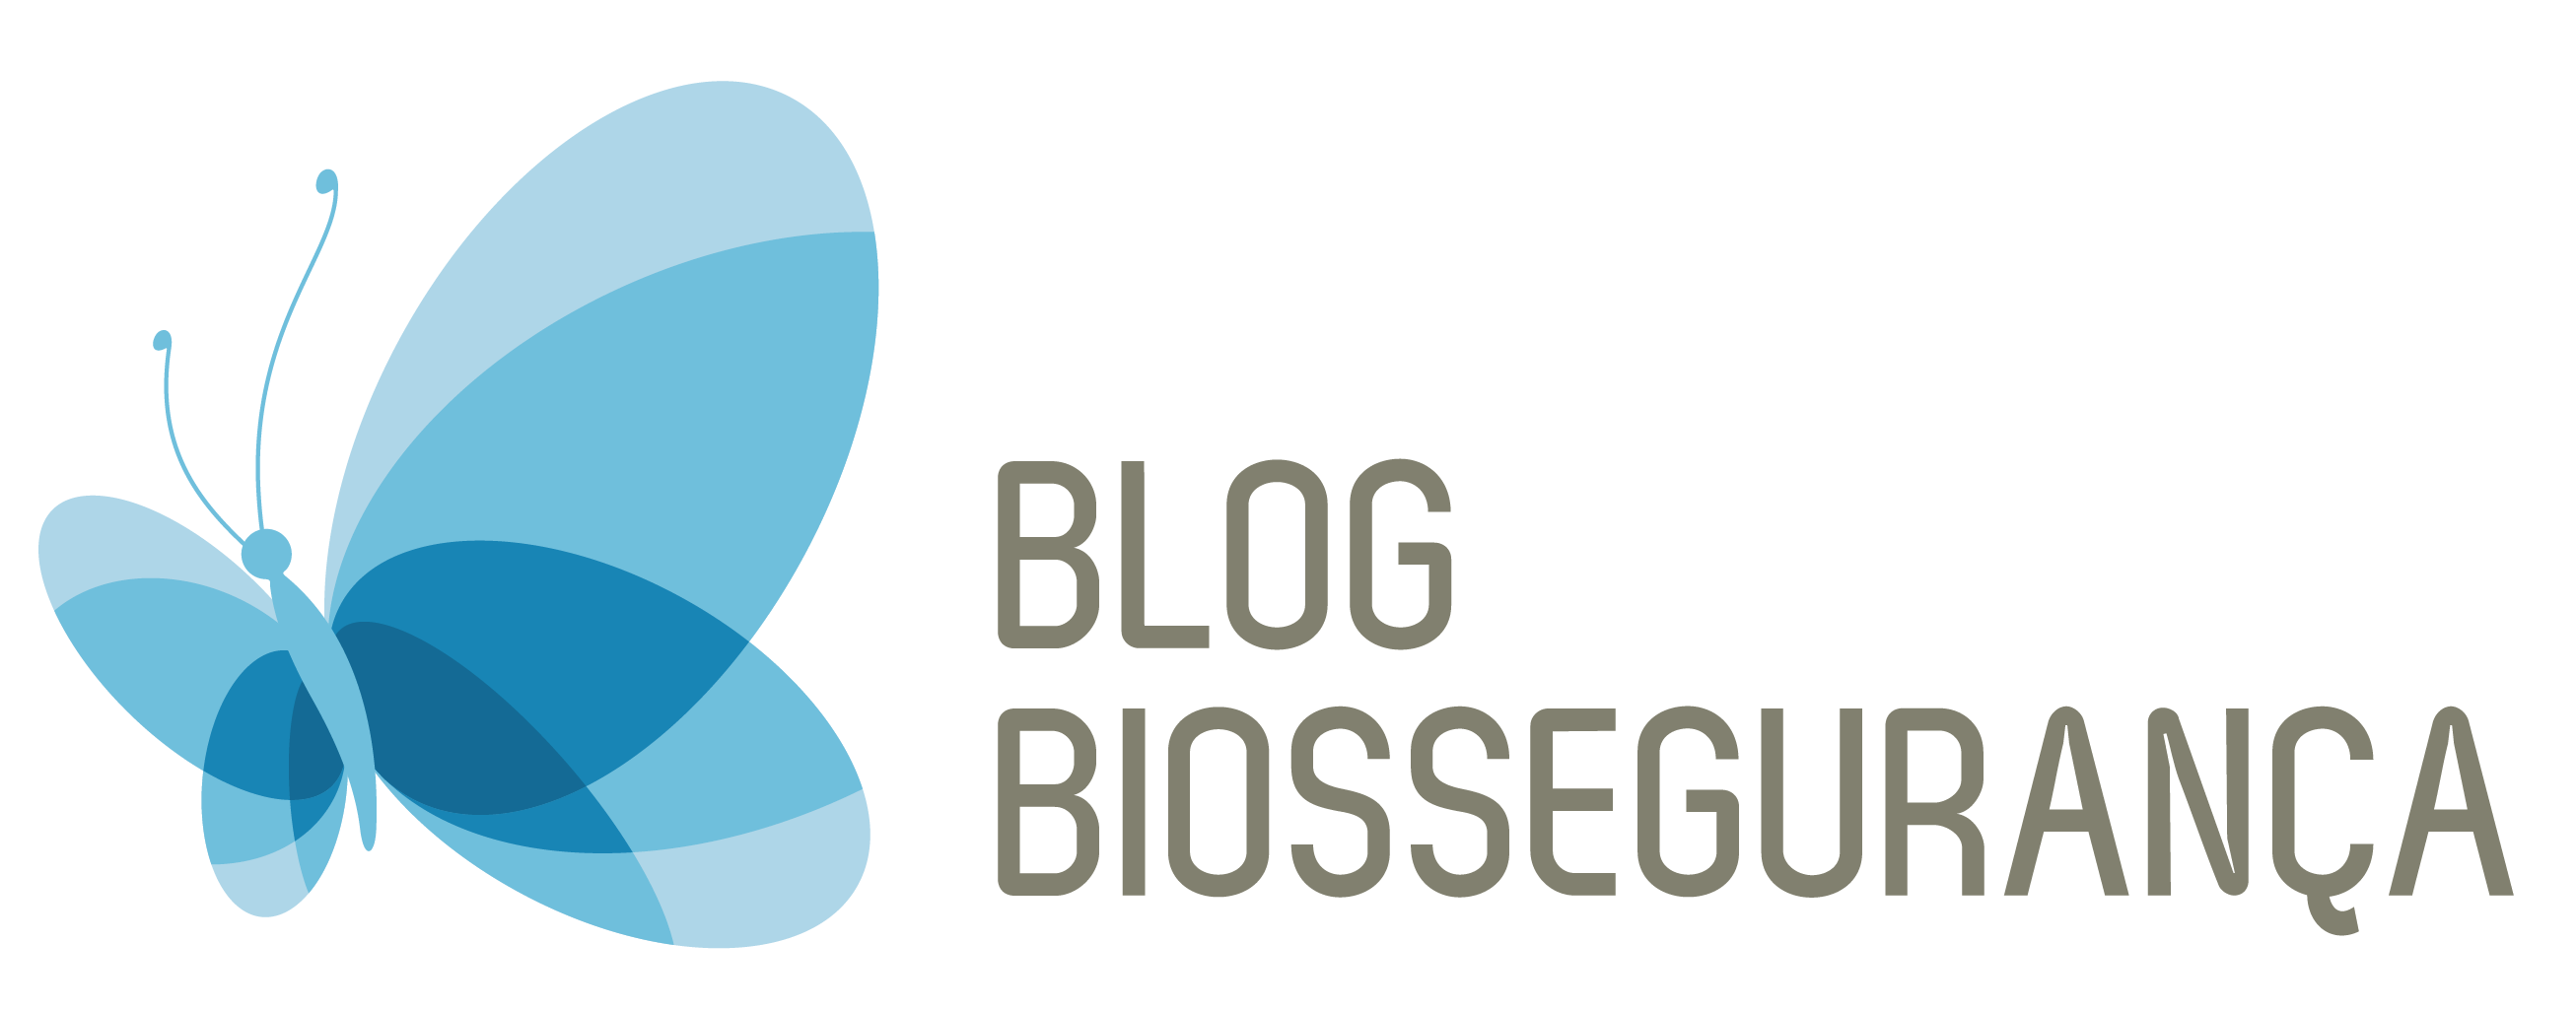 Blog da BioSegurança